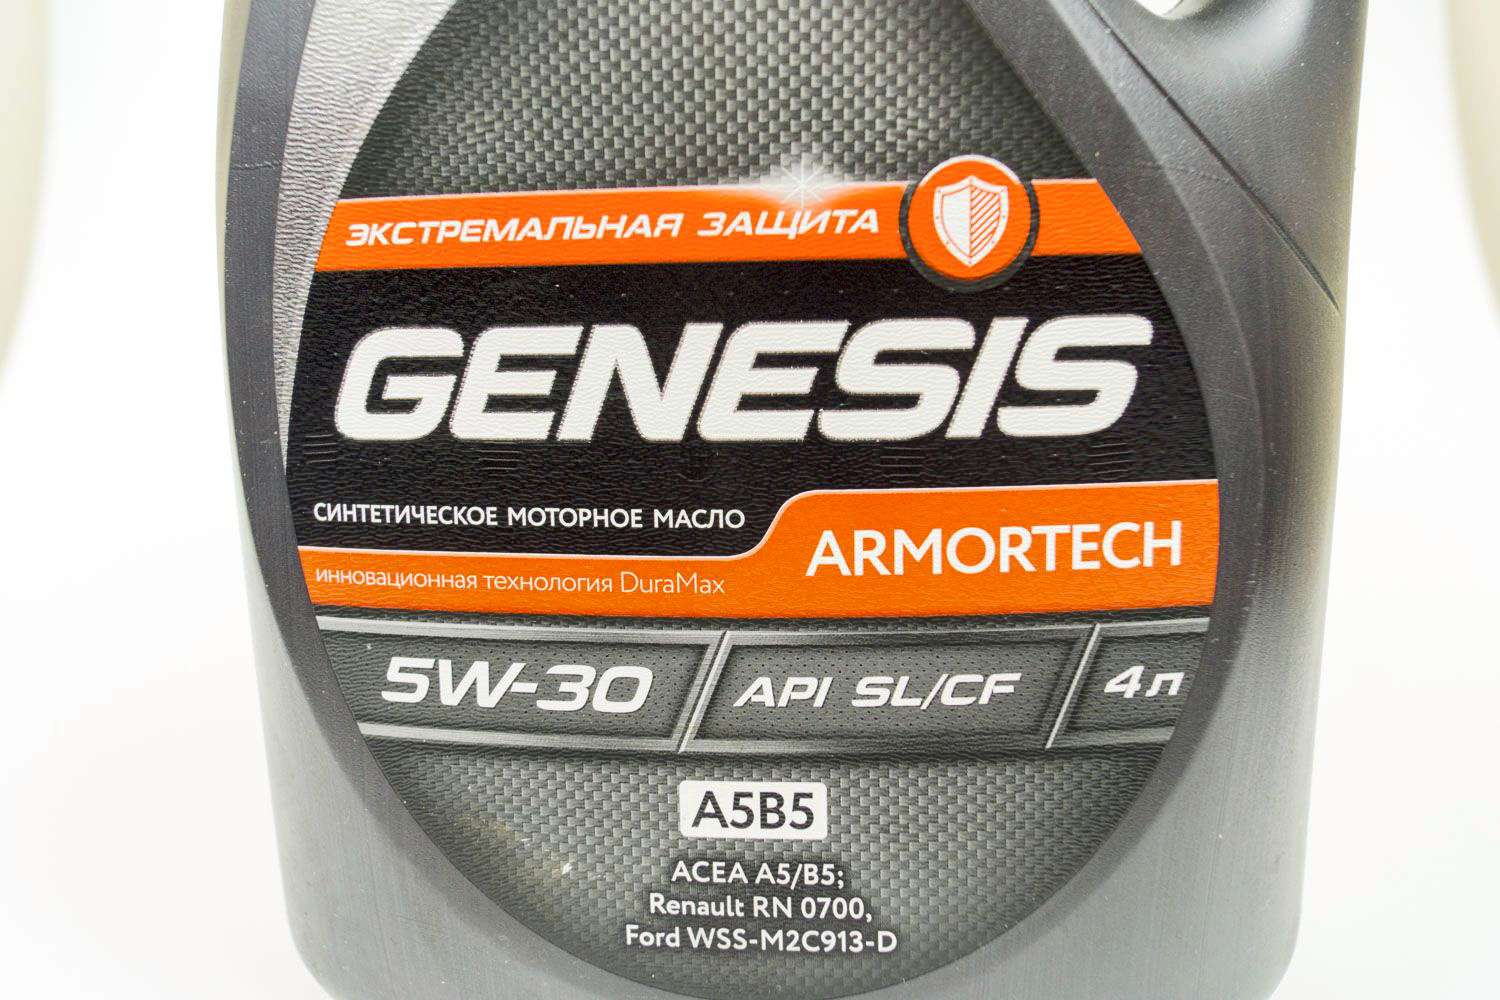 Масло лукойл армотек 5w30. Genesis Armortech 5w-30. Lukoil Genesis Armortech 5w-30. Genesis Armortech 5w30 защита. Lukoil Genesis 5w30 SL/CF a5/b5.